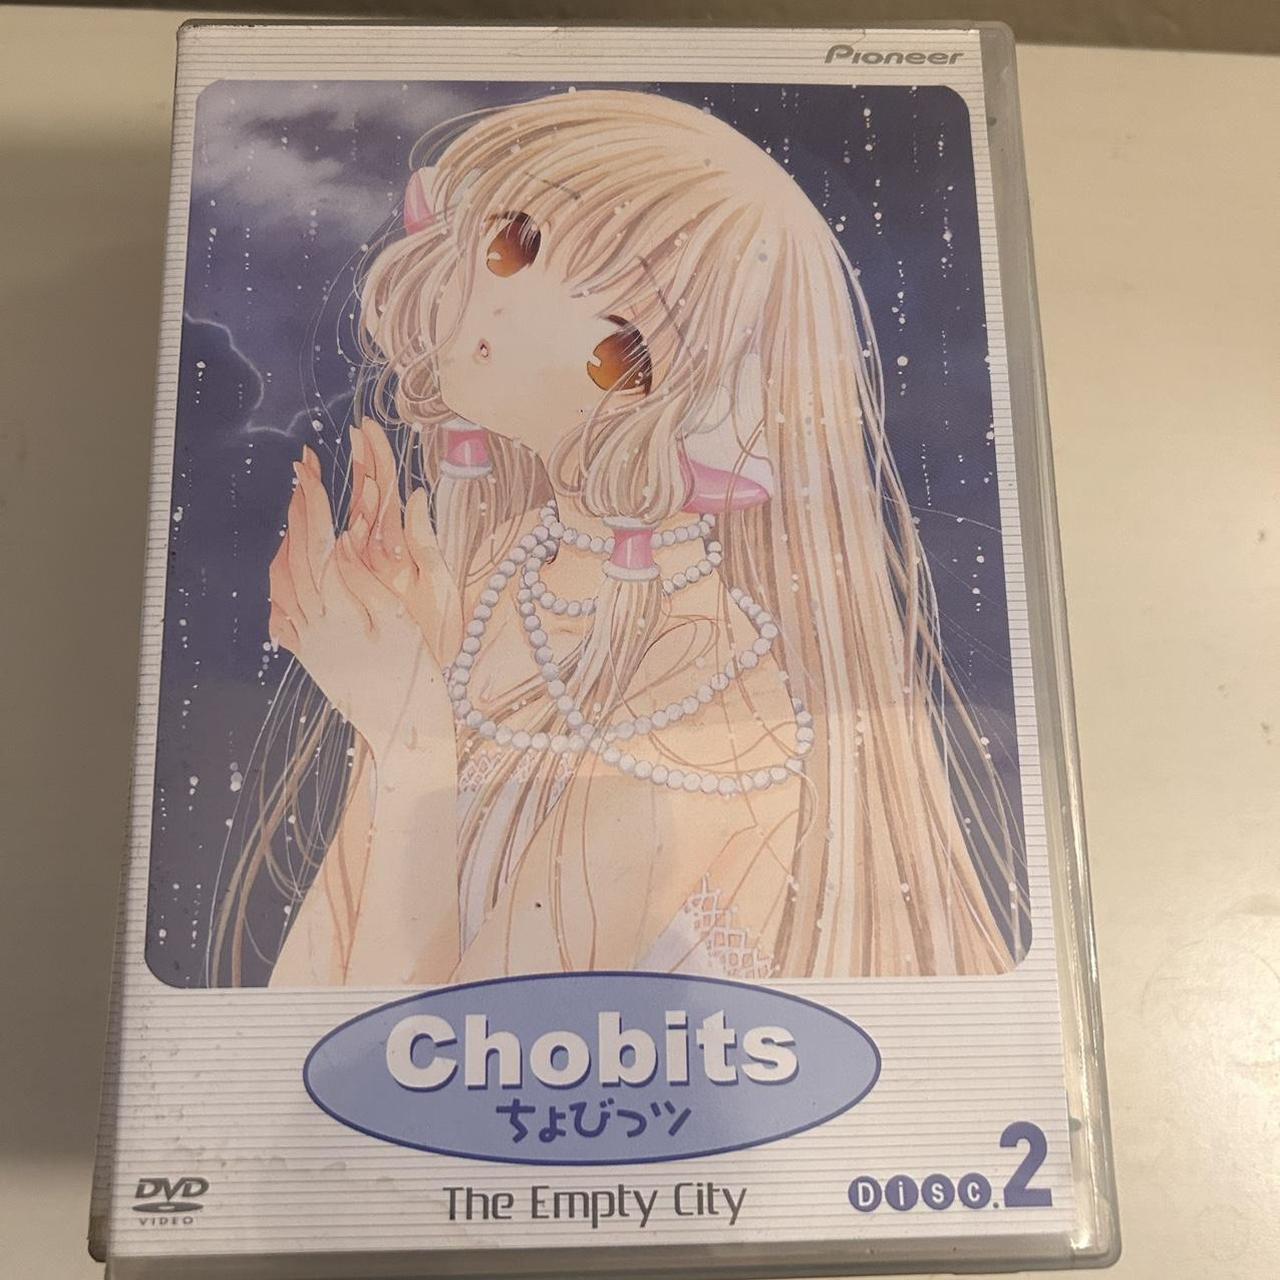 Chobits Dvd Set Missing Disc Please See Photos Depop